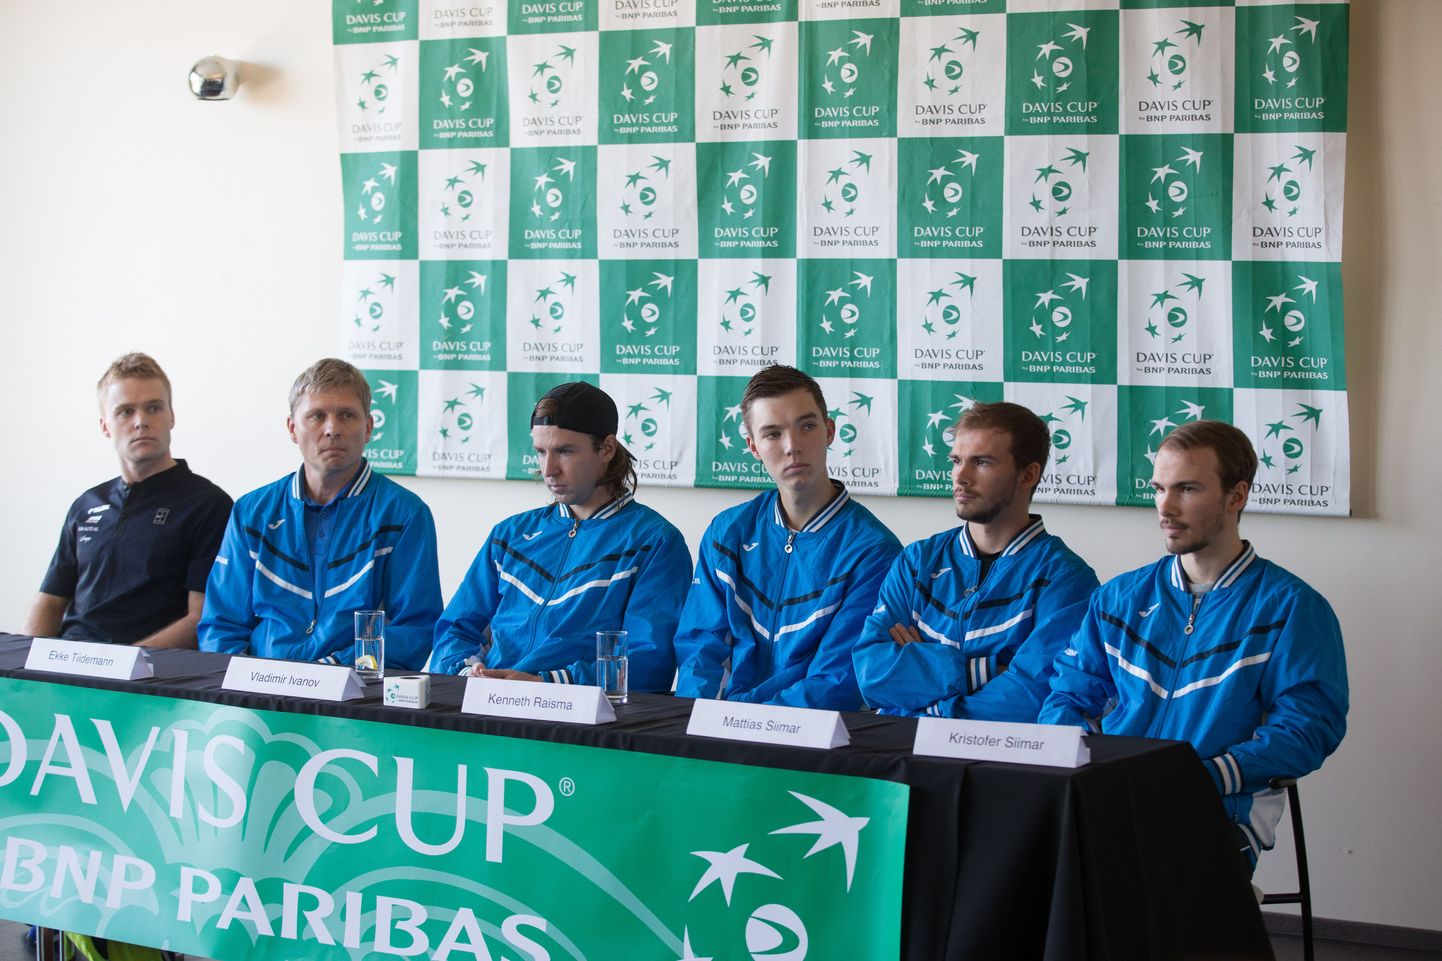 Vasakult Jürgen Zopp, Ekke Tiidemann, Vladimir Ivanov, Kenneth Raisma, Mattias Siimar, Kristofer Siimar.